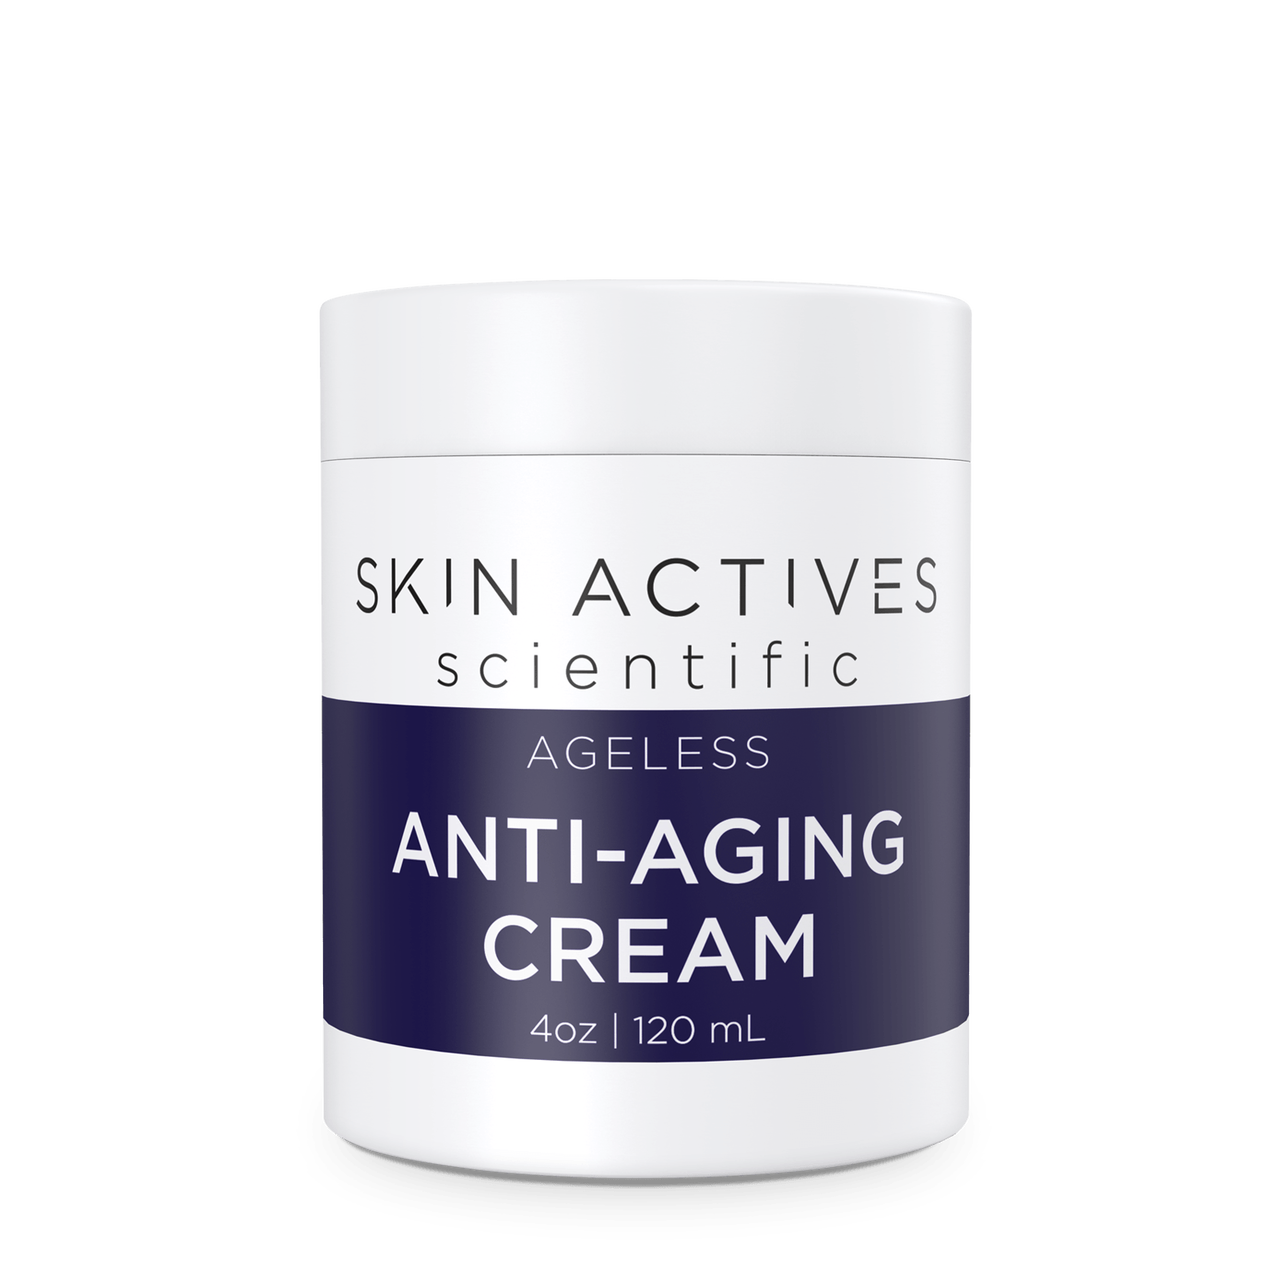 Anti-Aging Cream - Wrinkle Repair - Skin Actives - 4.0 oz.